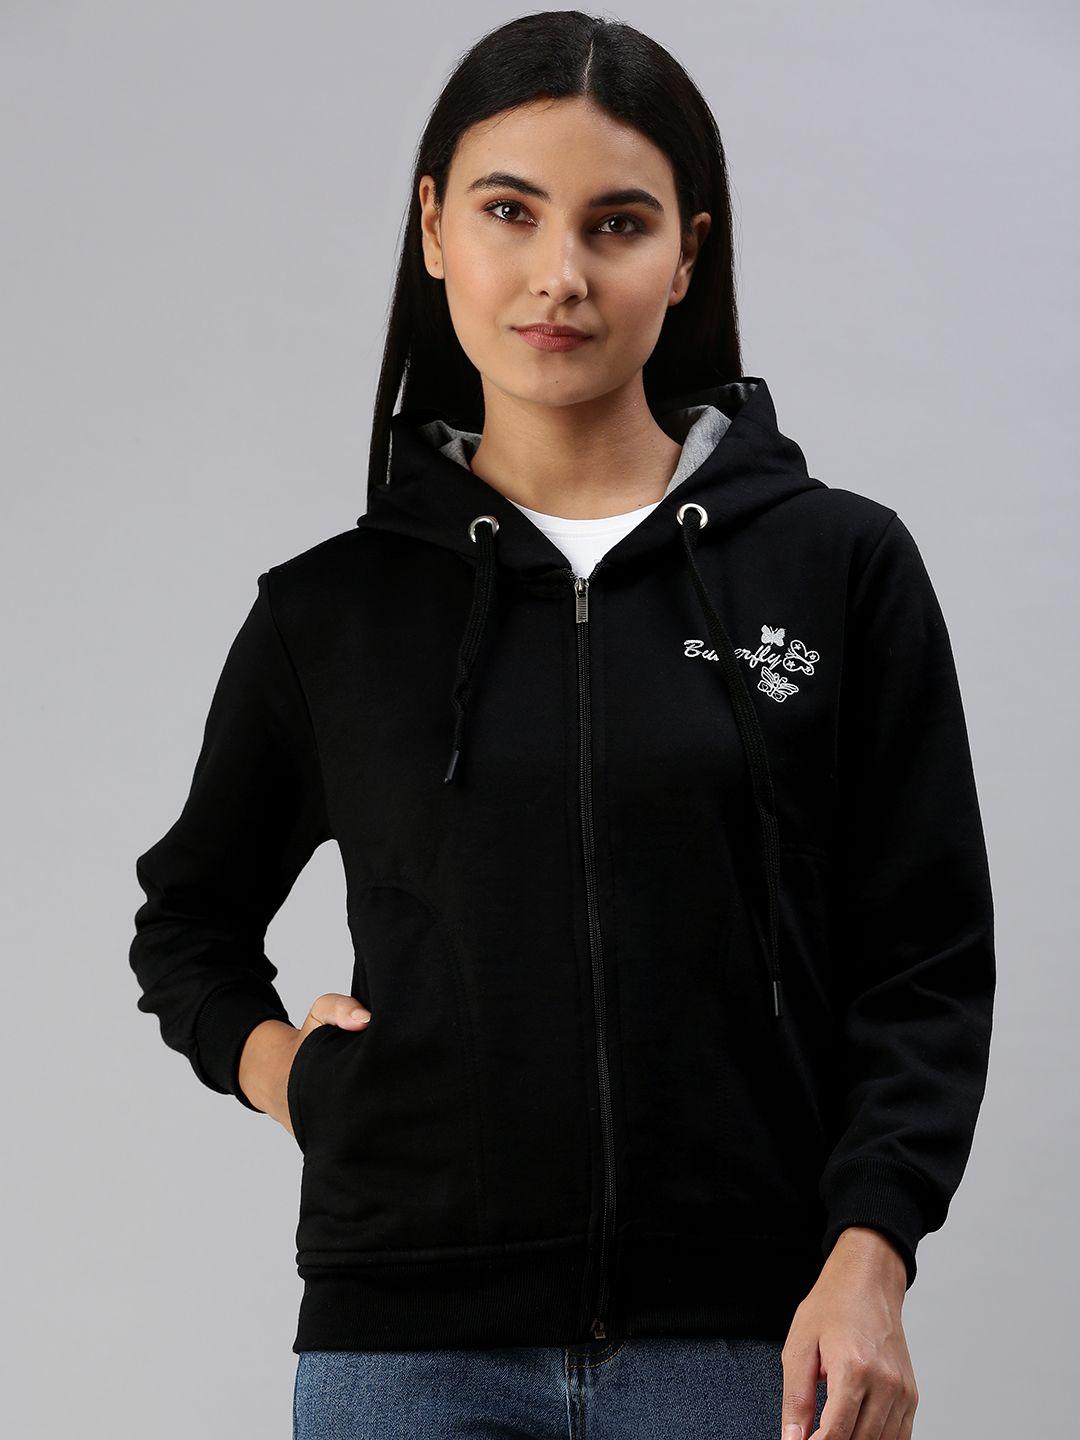 adbucks women black hooded sweatshirt